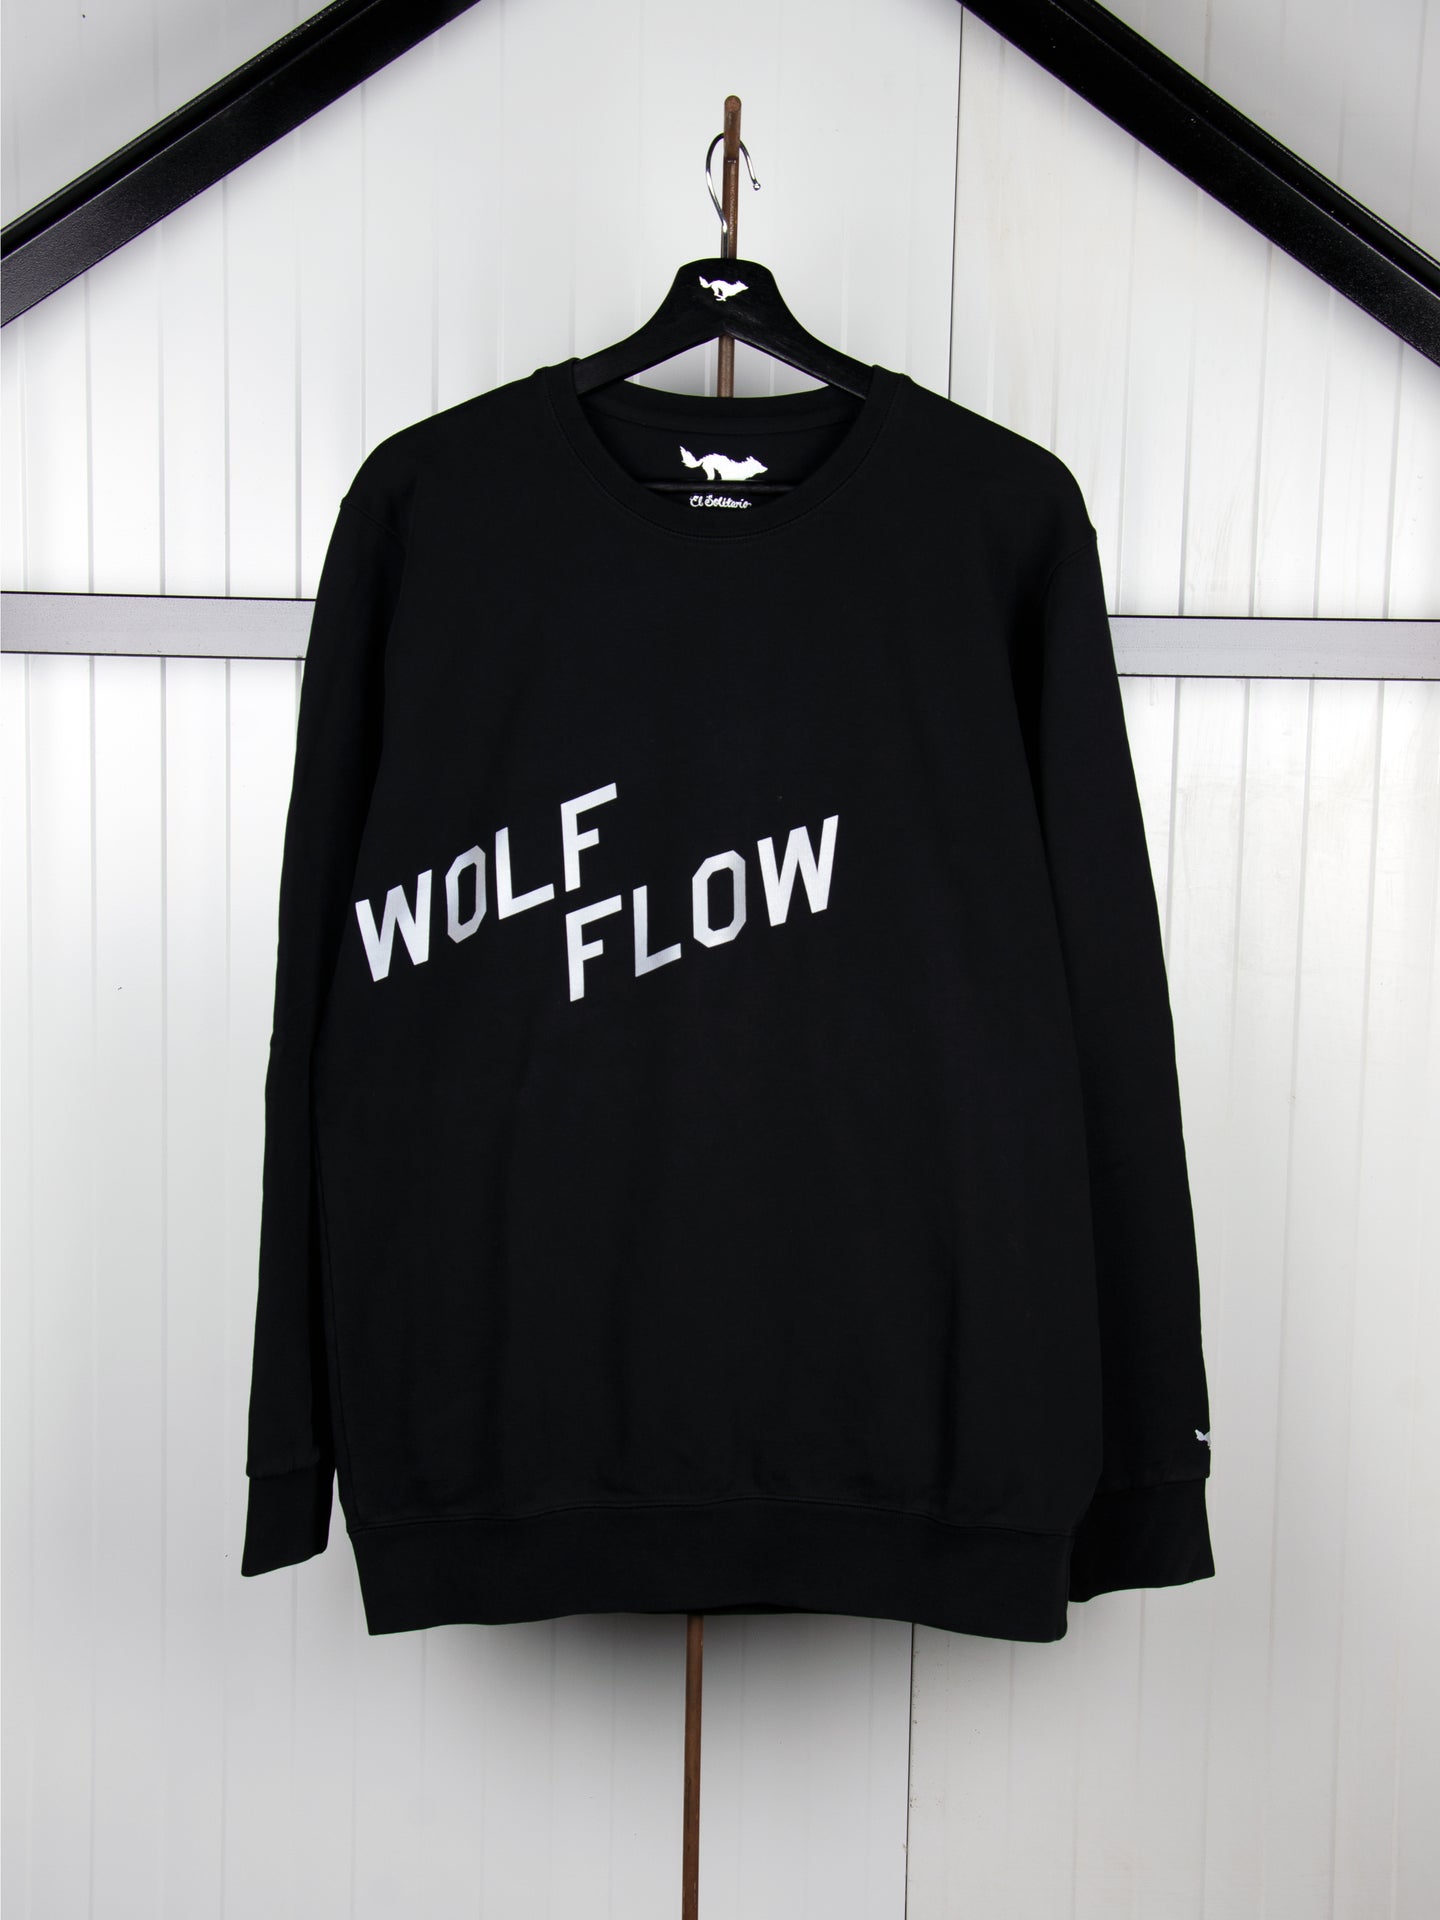 N.O.S. Wolf Flow Sweatshirt